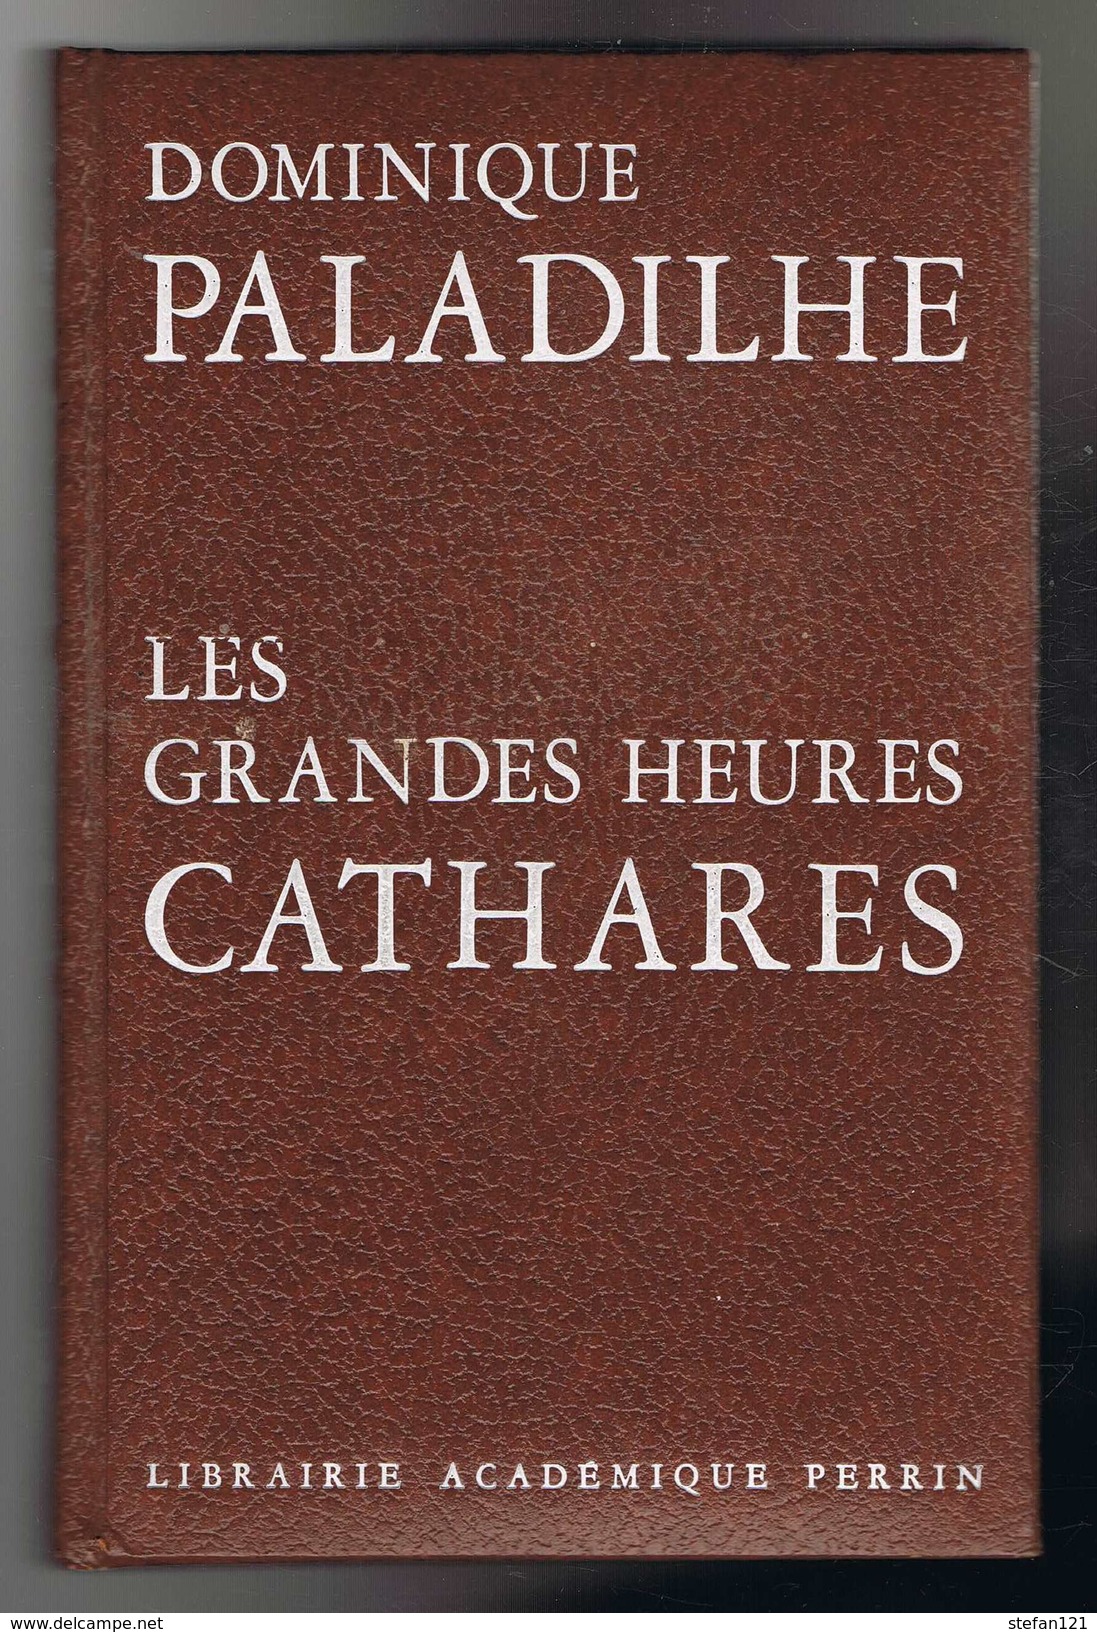 Les Grandes Heures Cathares - Dominique Paladilhe - 1969 - 286 Pages 20,8 X 13,5 Cm - Histoire